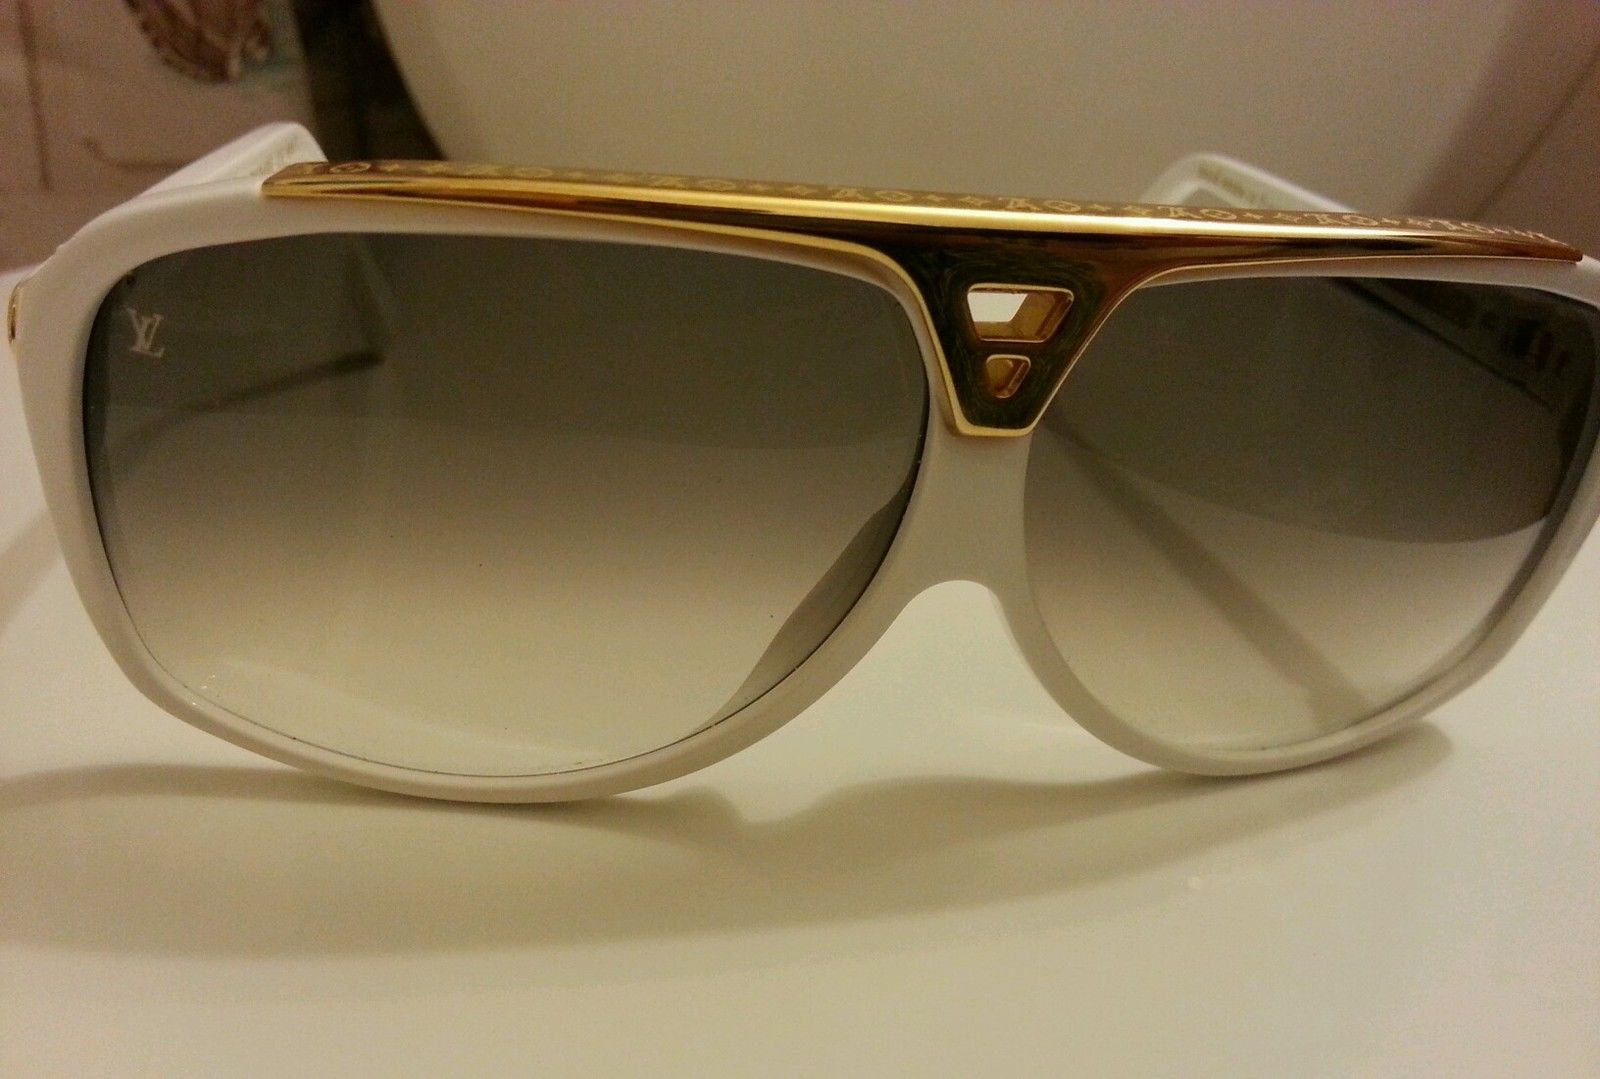 How To Spot Fake Louis Vuitton Sunglasses | IQS Executive